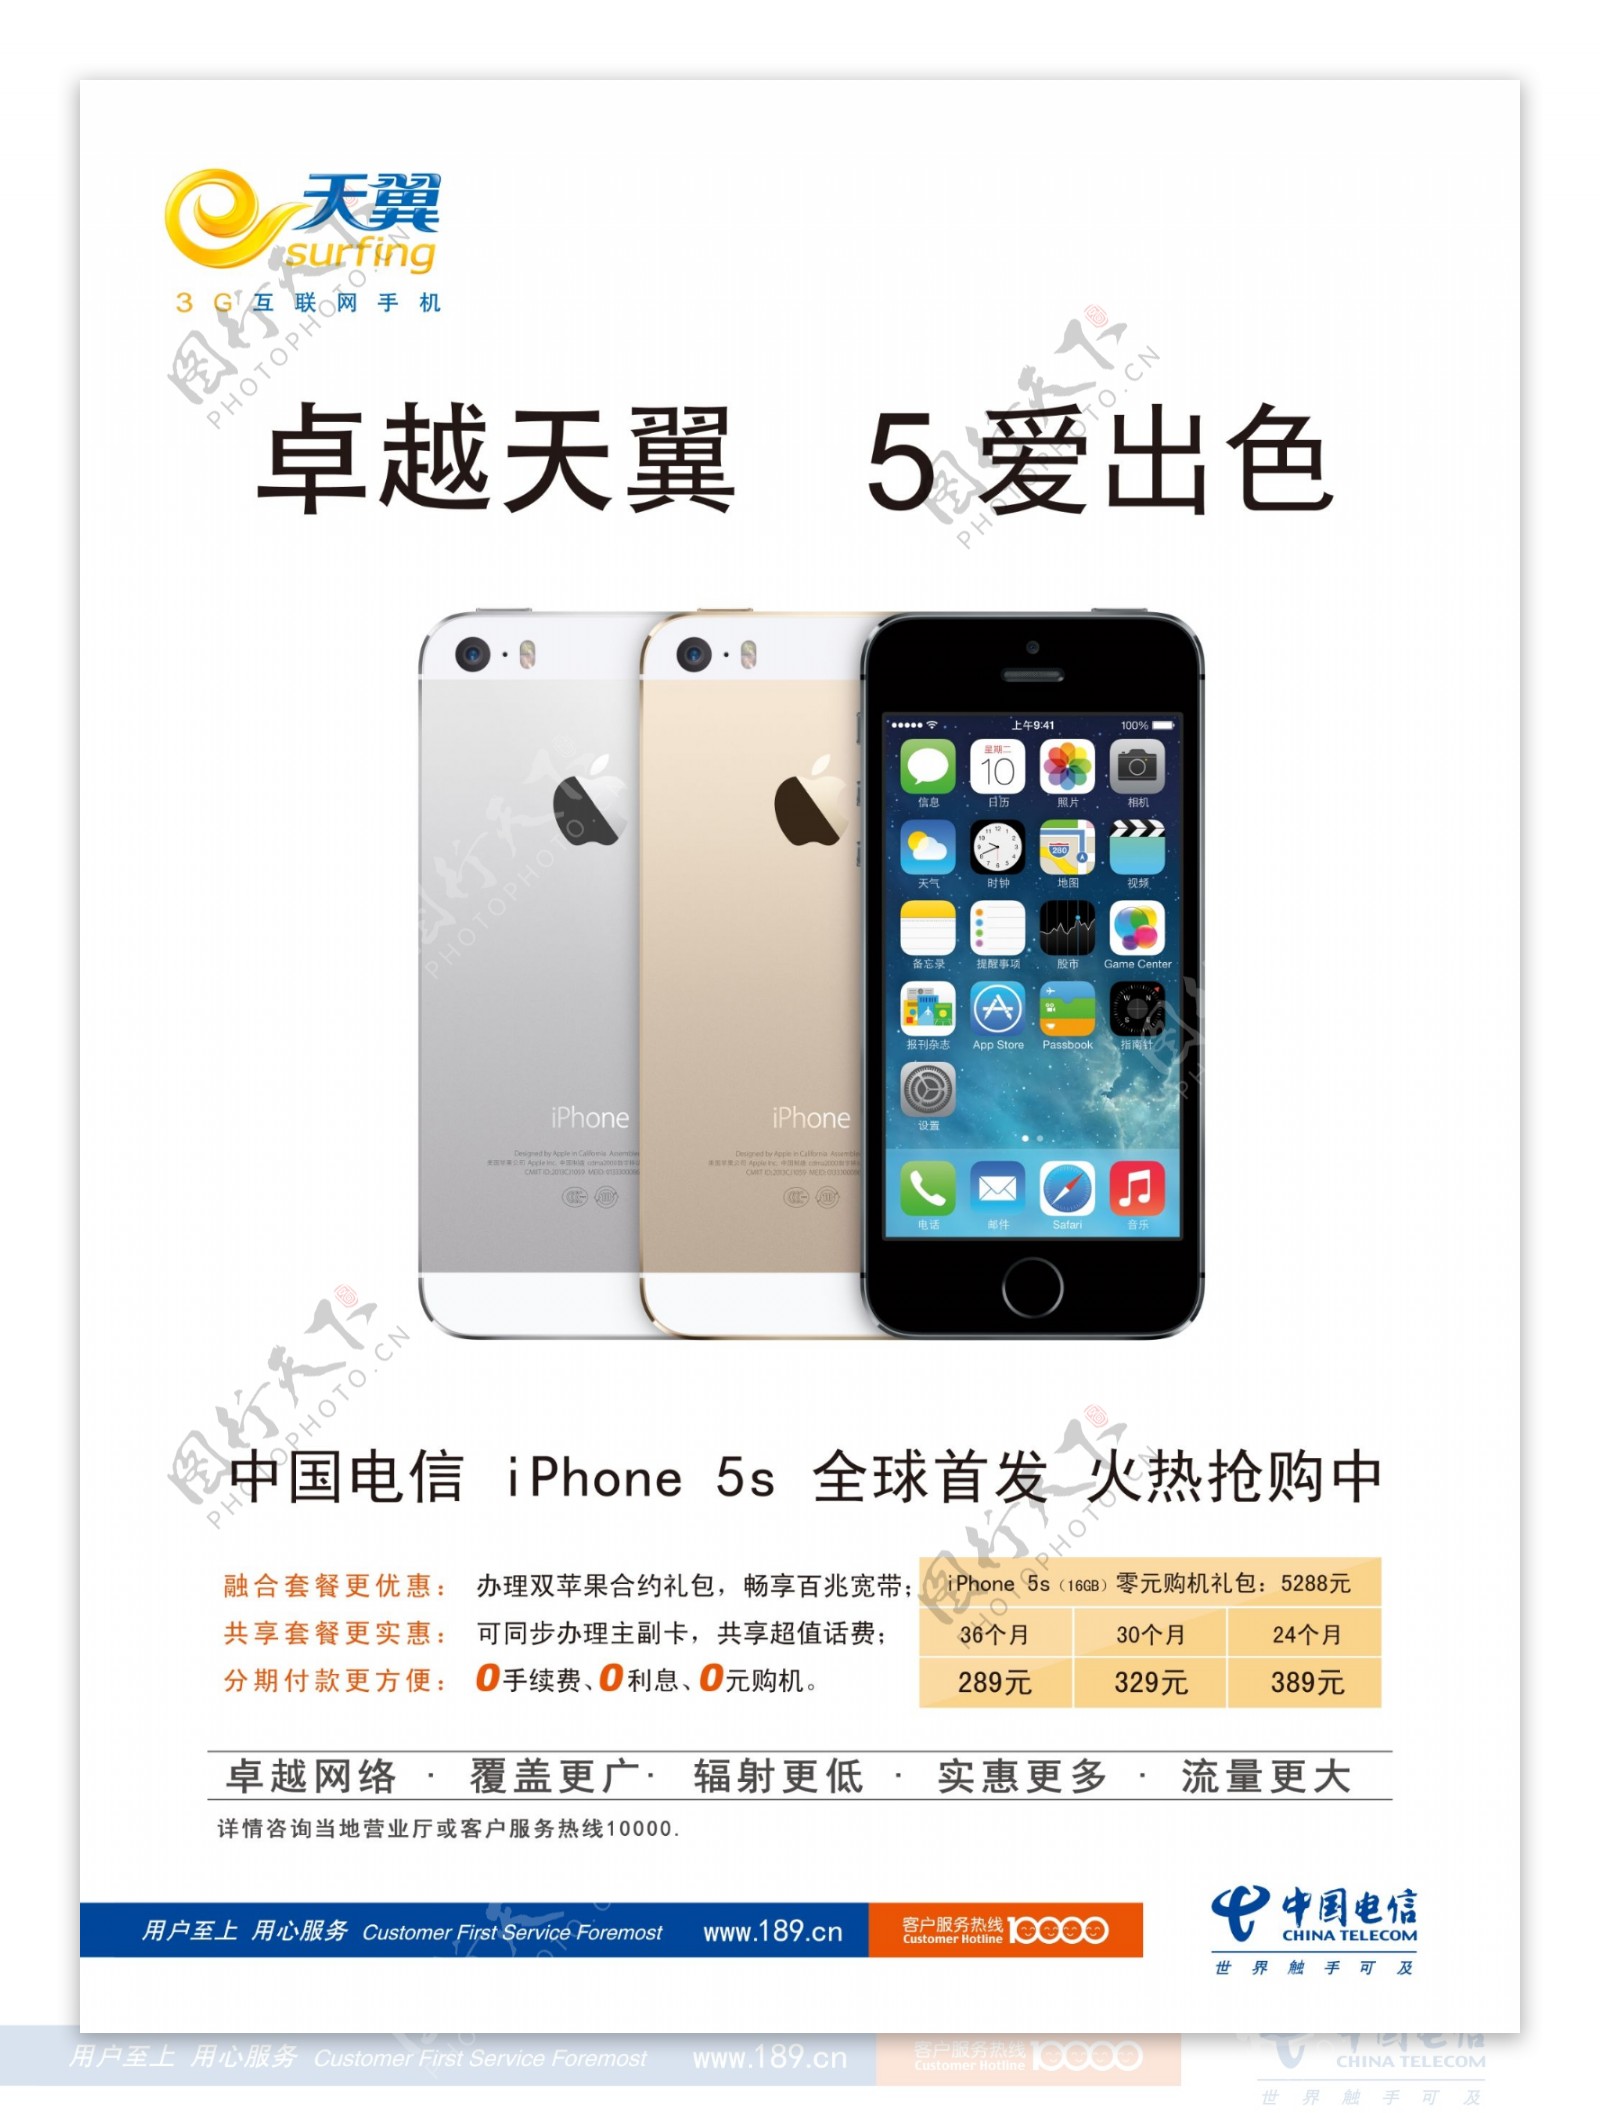 Apple iPhone 5s A1533 1gb 32gb | Envío gratis